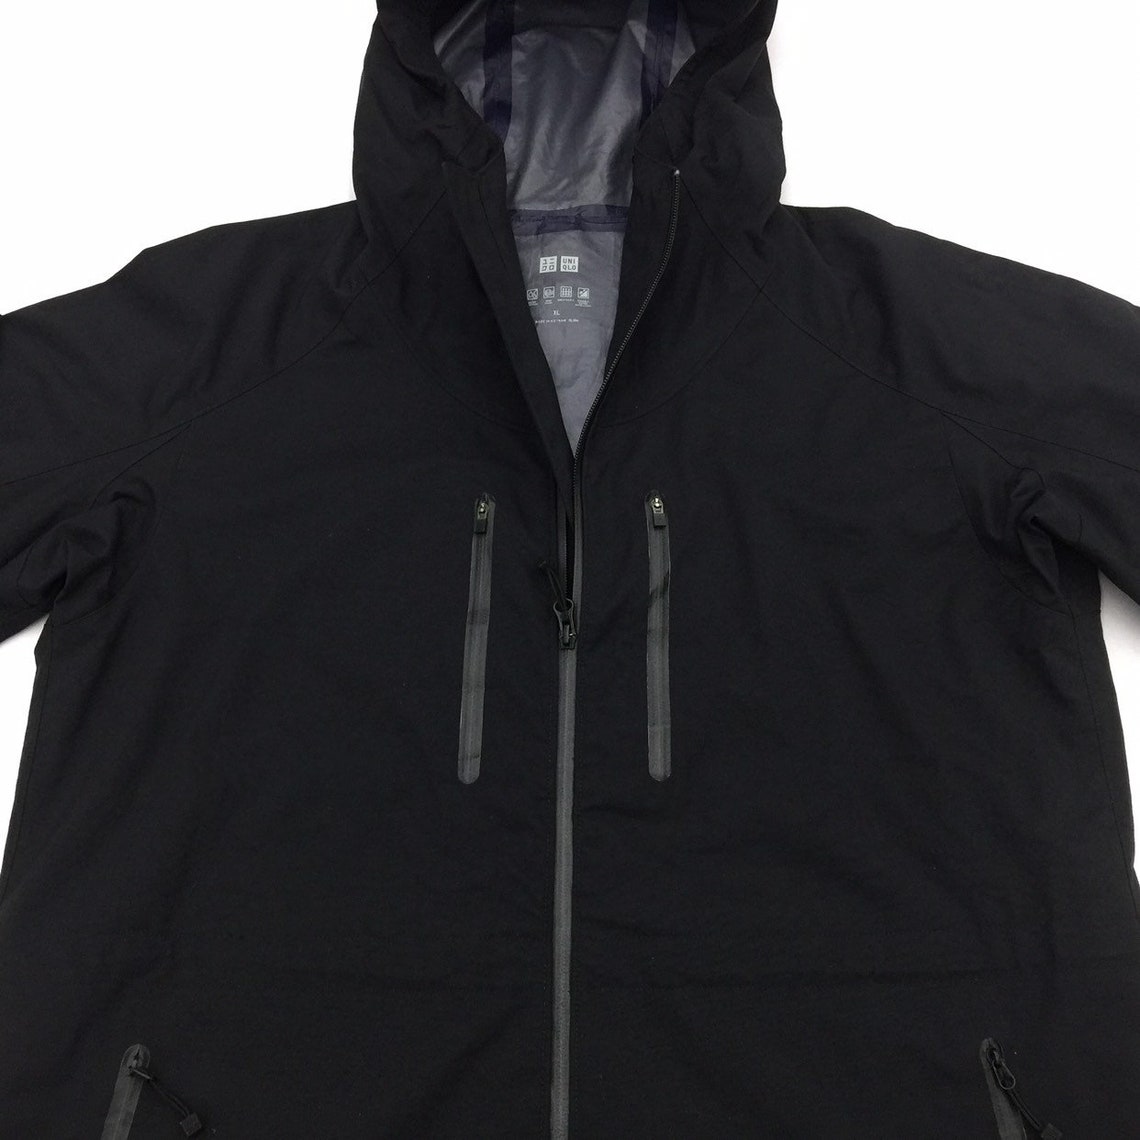 Uniqlo Raincoat Uniqlo Full Zip Black Plain Solid Raincoat | Etsy